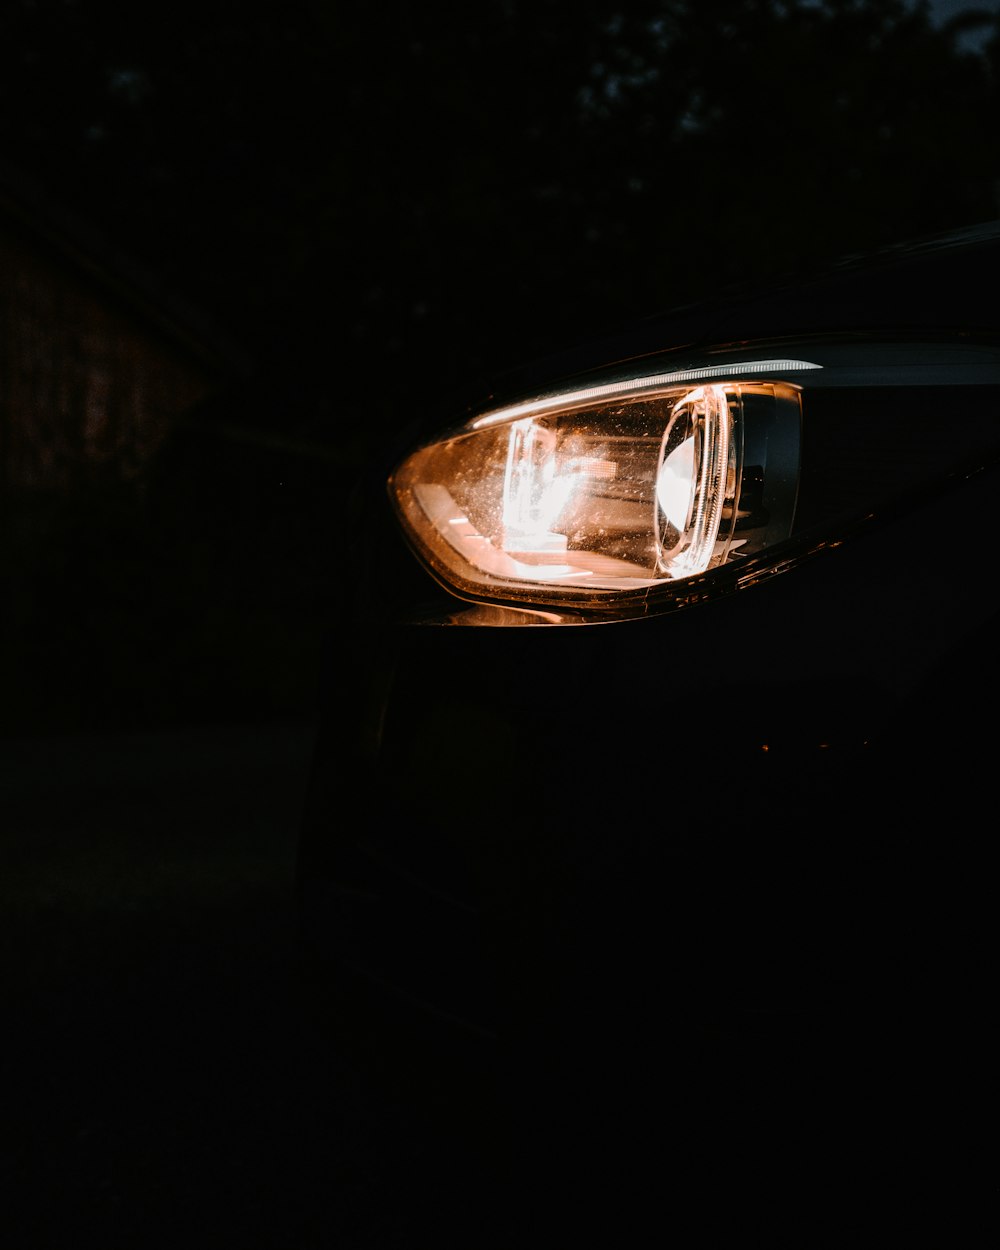 a close up of a car's headlights